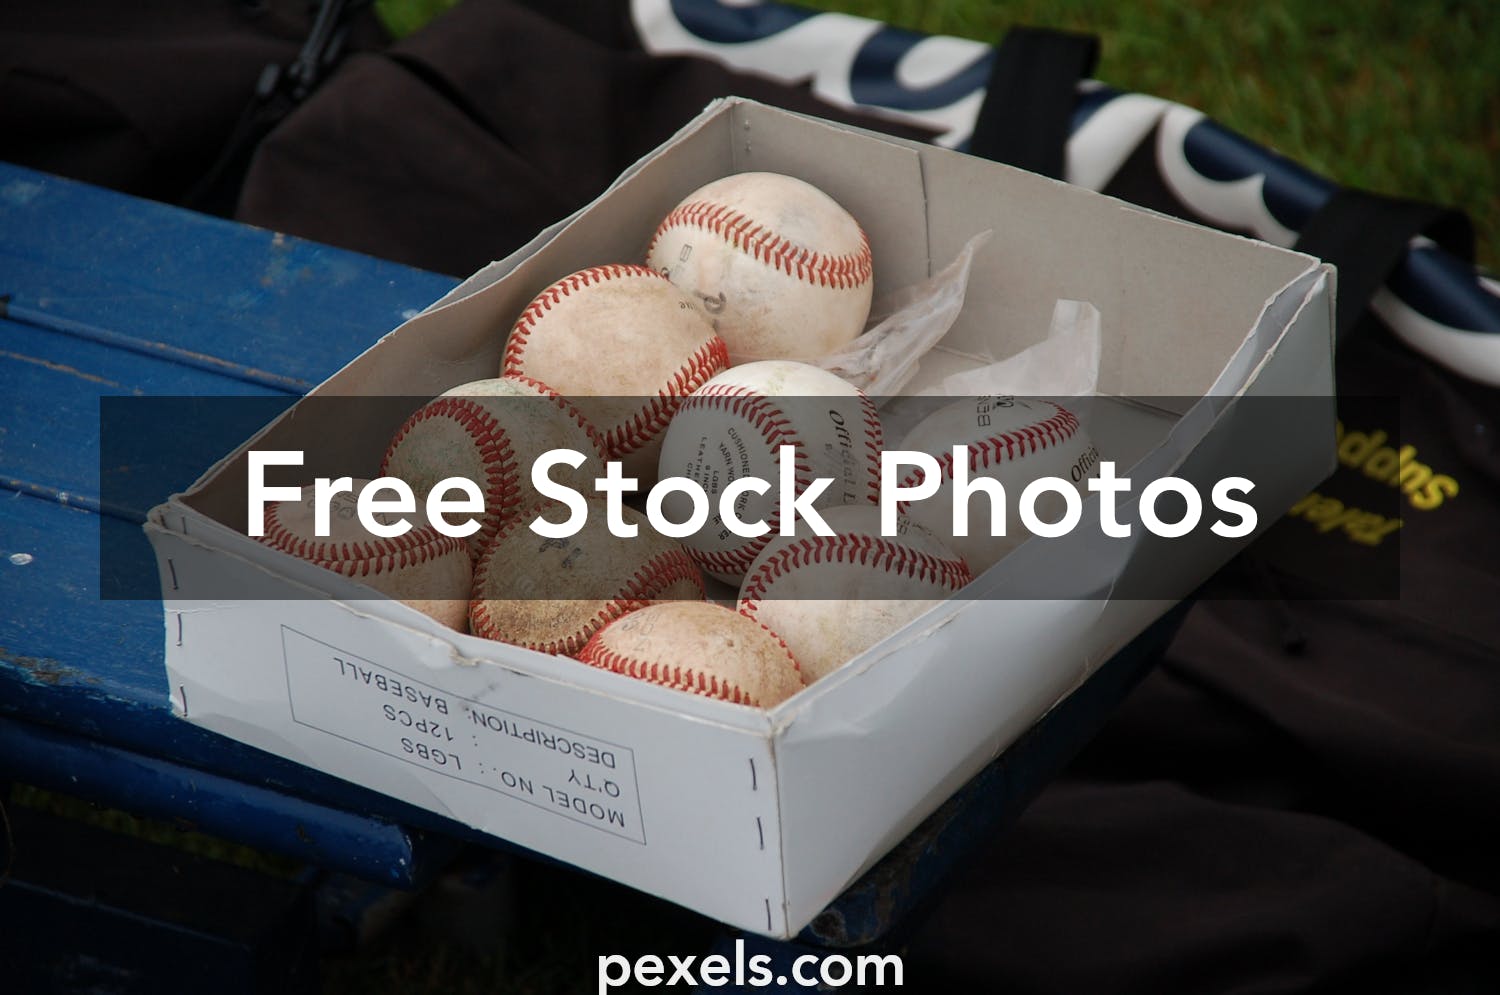 Lsu Baseball Box Score Photos, Download Free Lsu Baseball Box Score